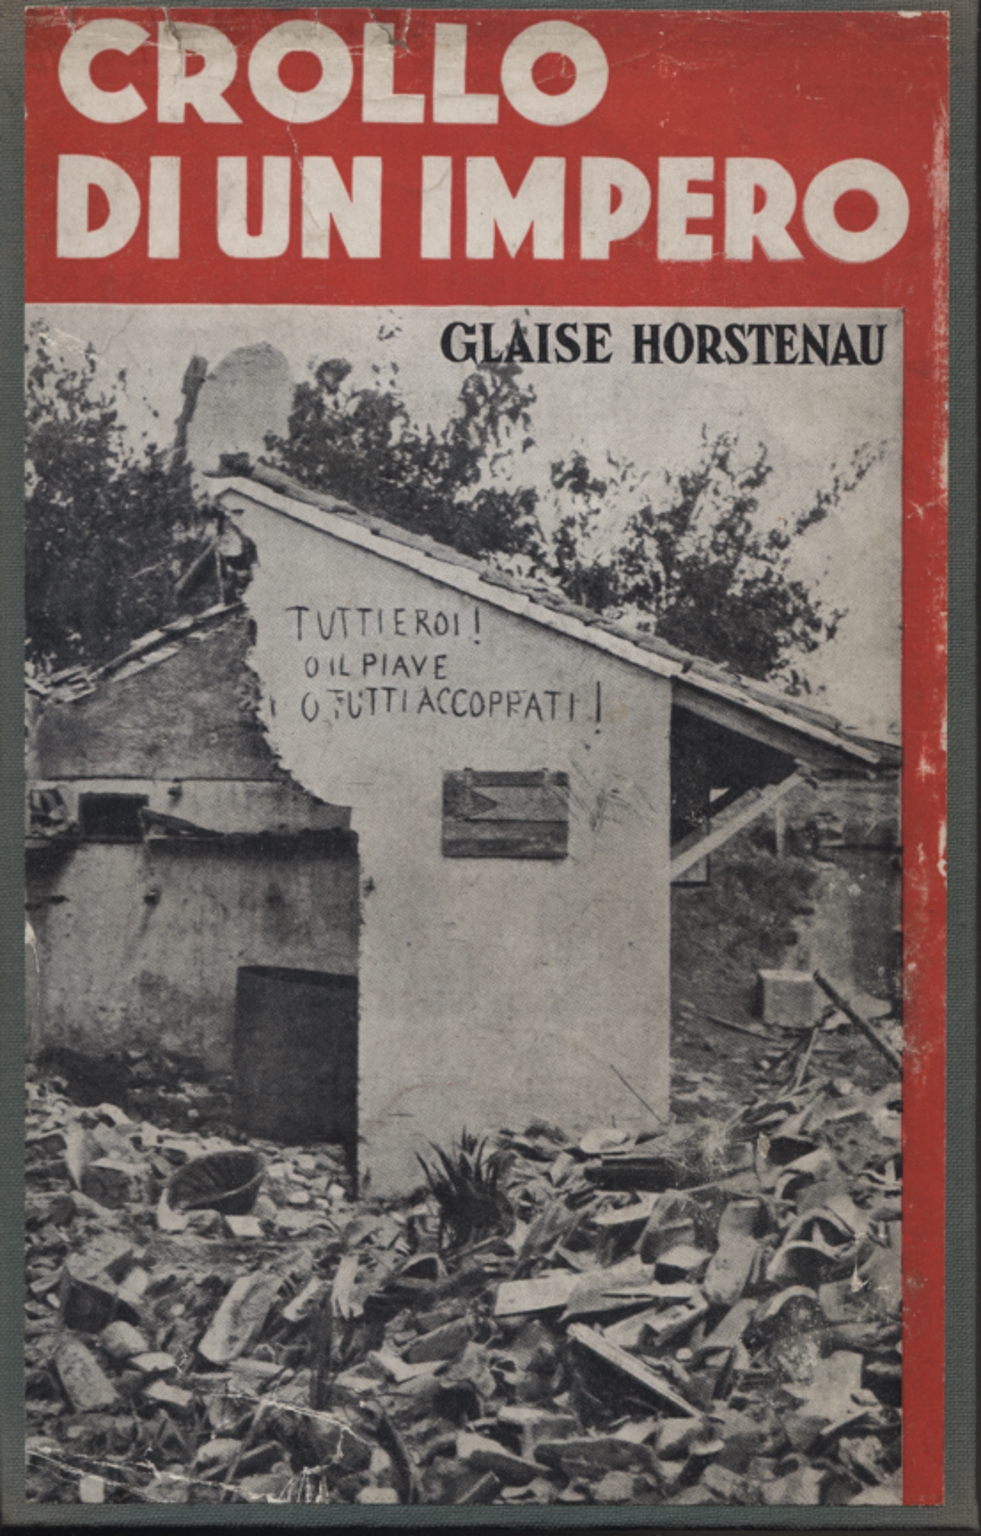 The Collapse of an Empire, Glaise Horstenau